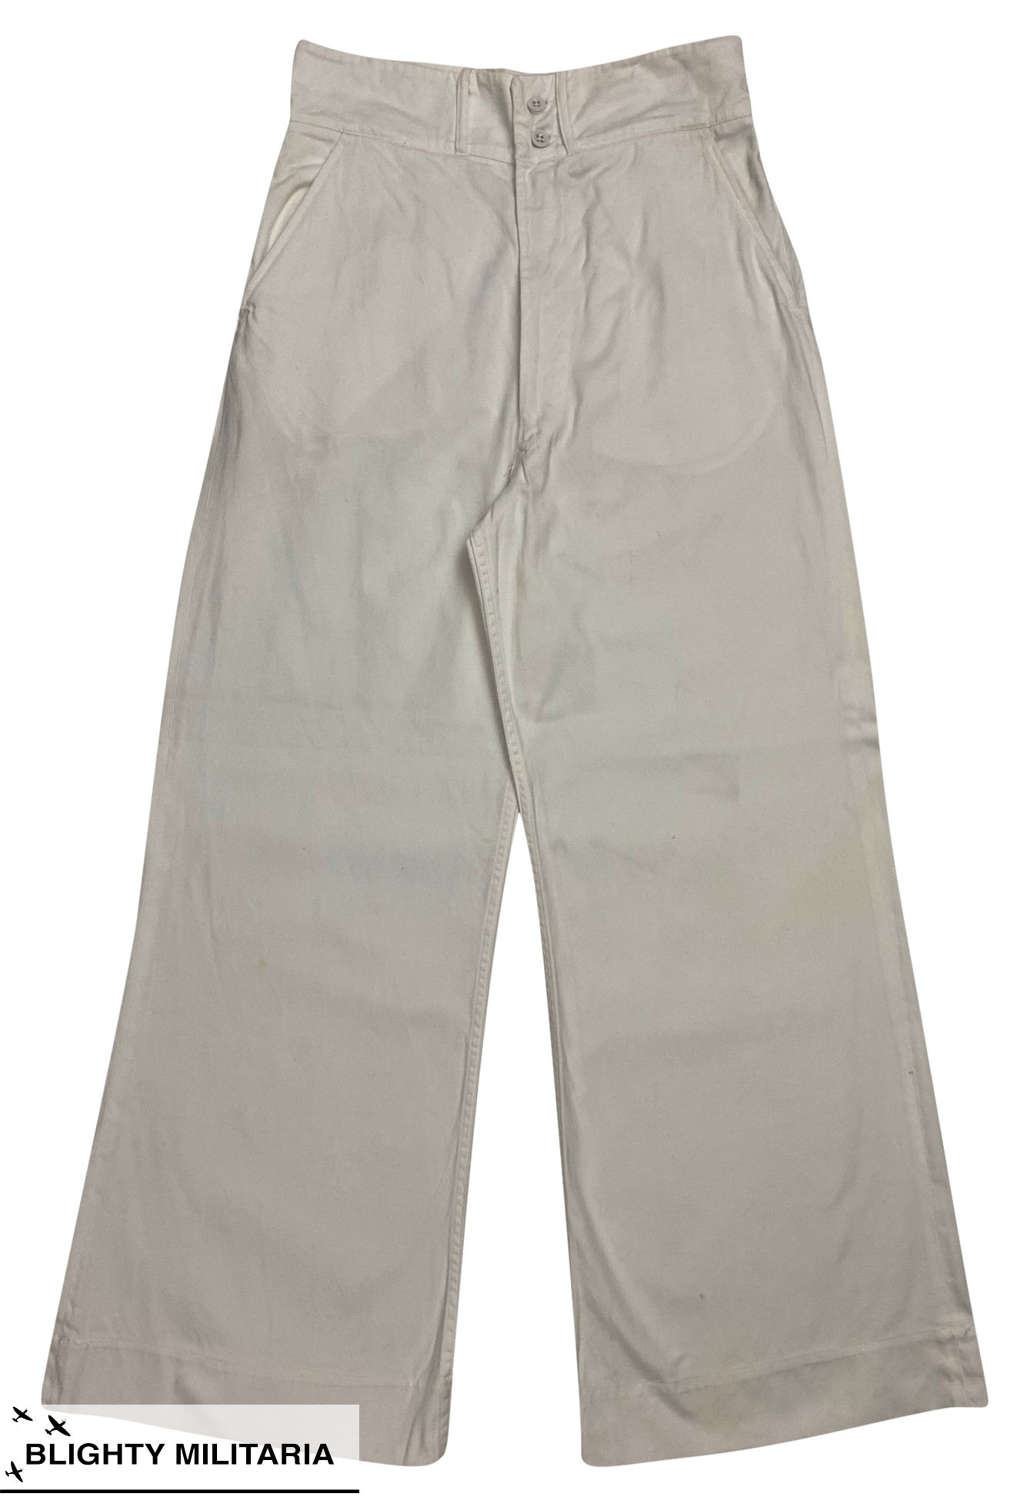 Original 1970s British Royal Navy White Cotton Trousers